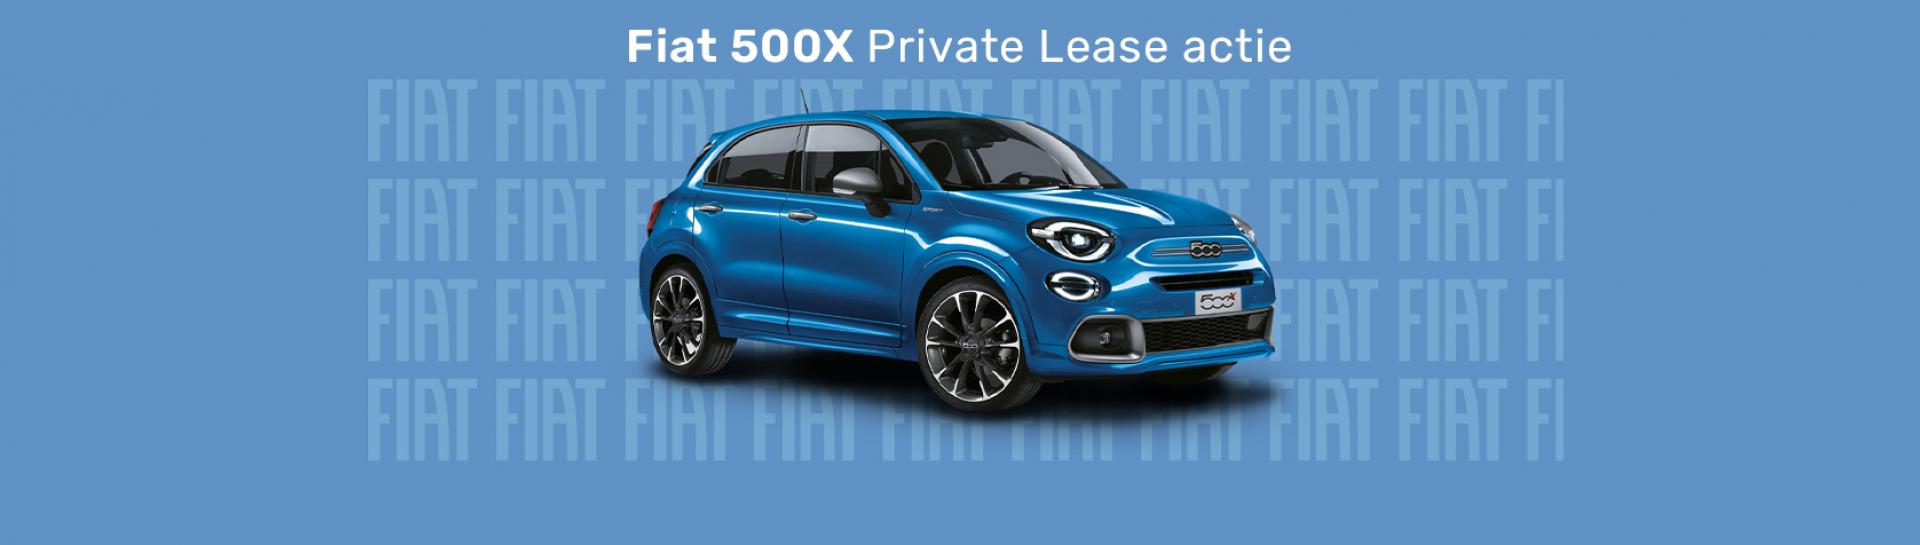 Fiat 500X Private Lease actie